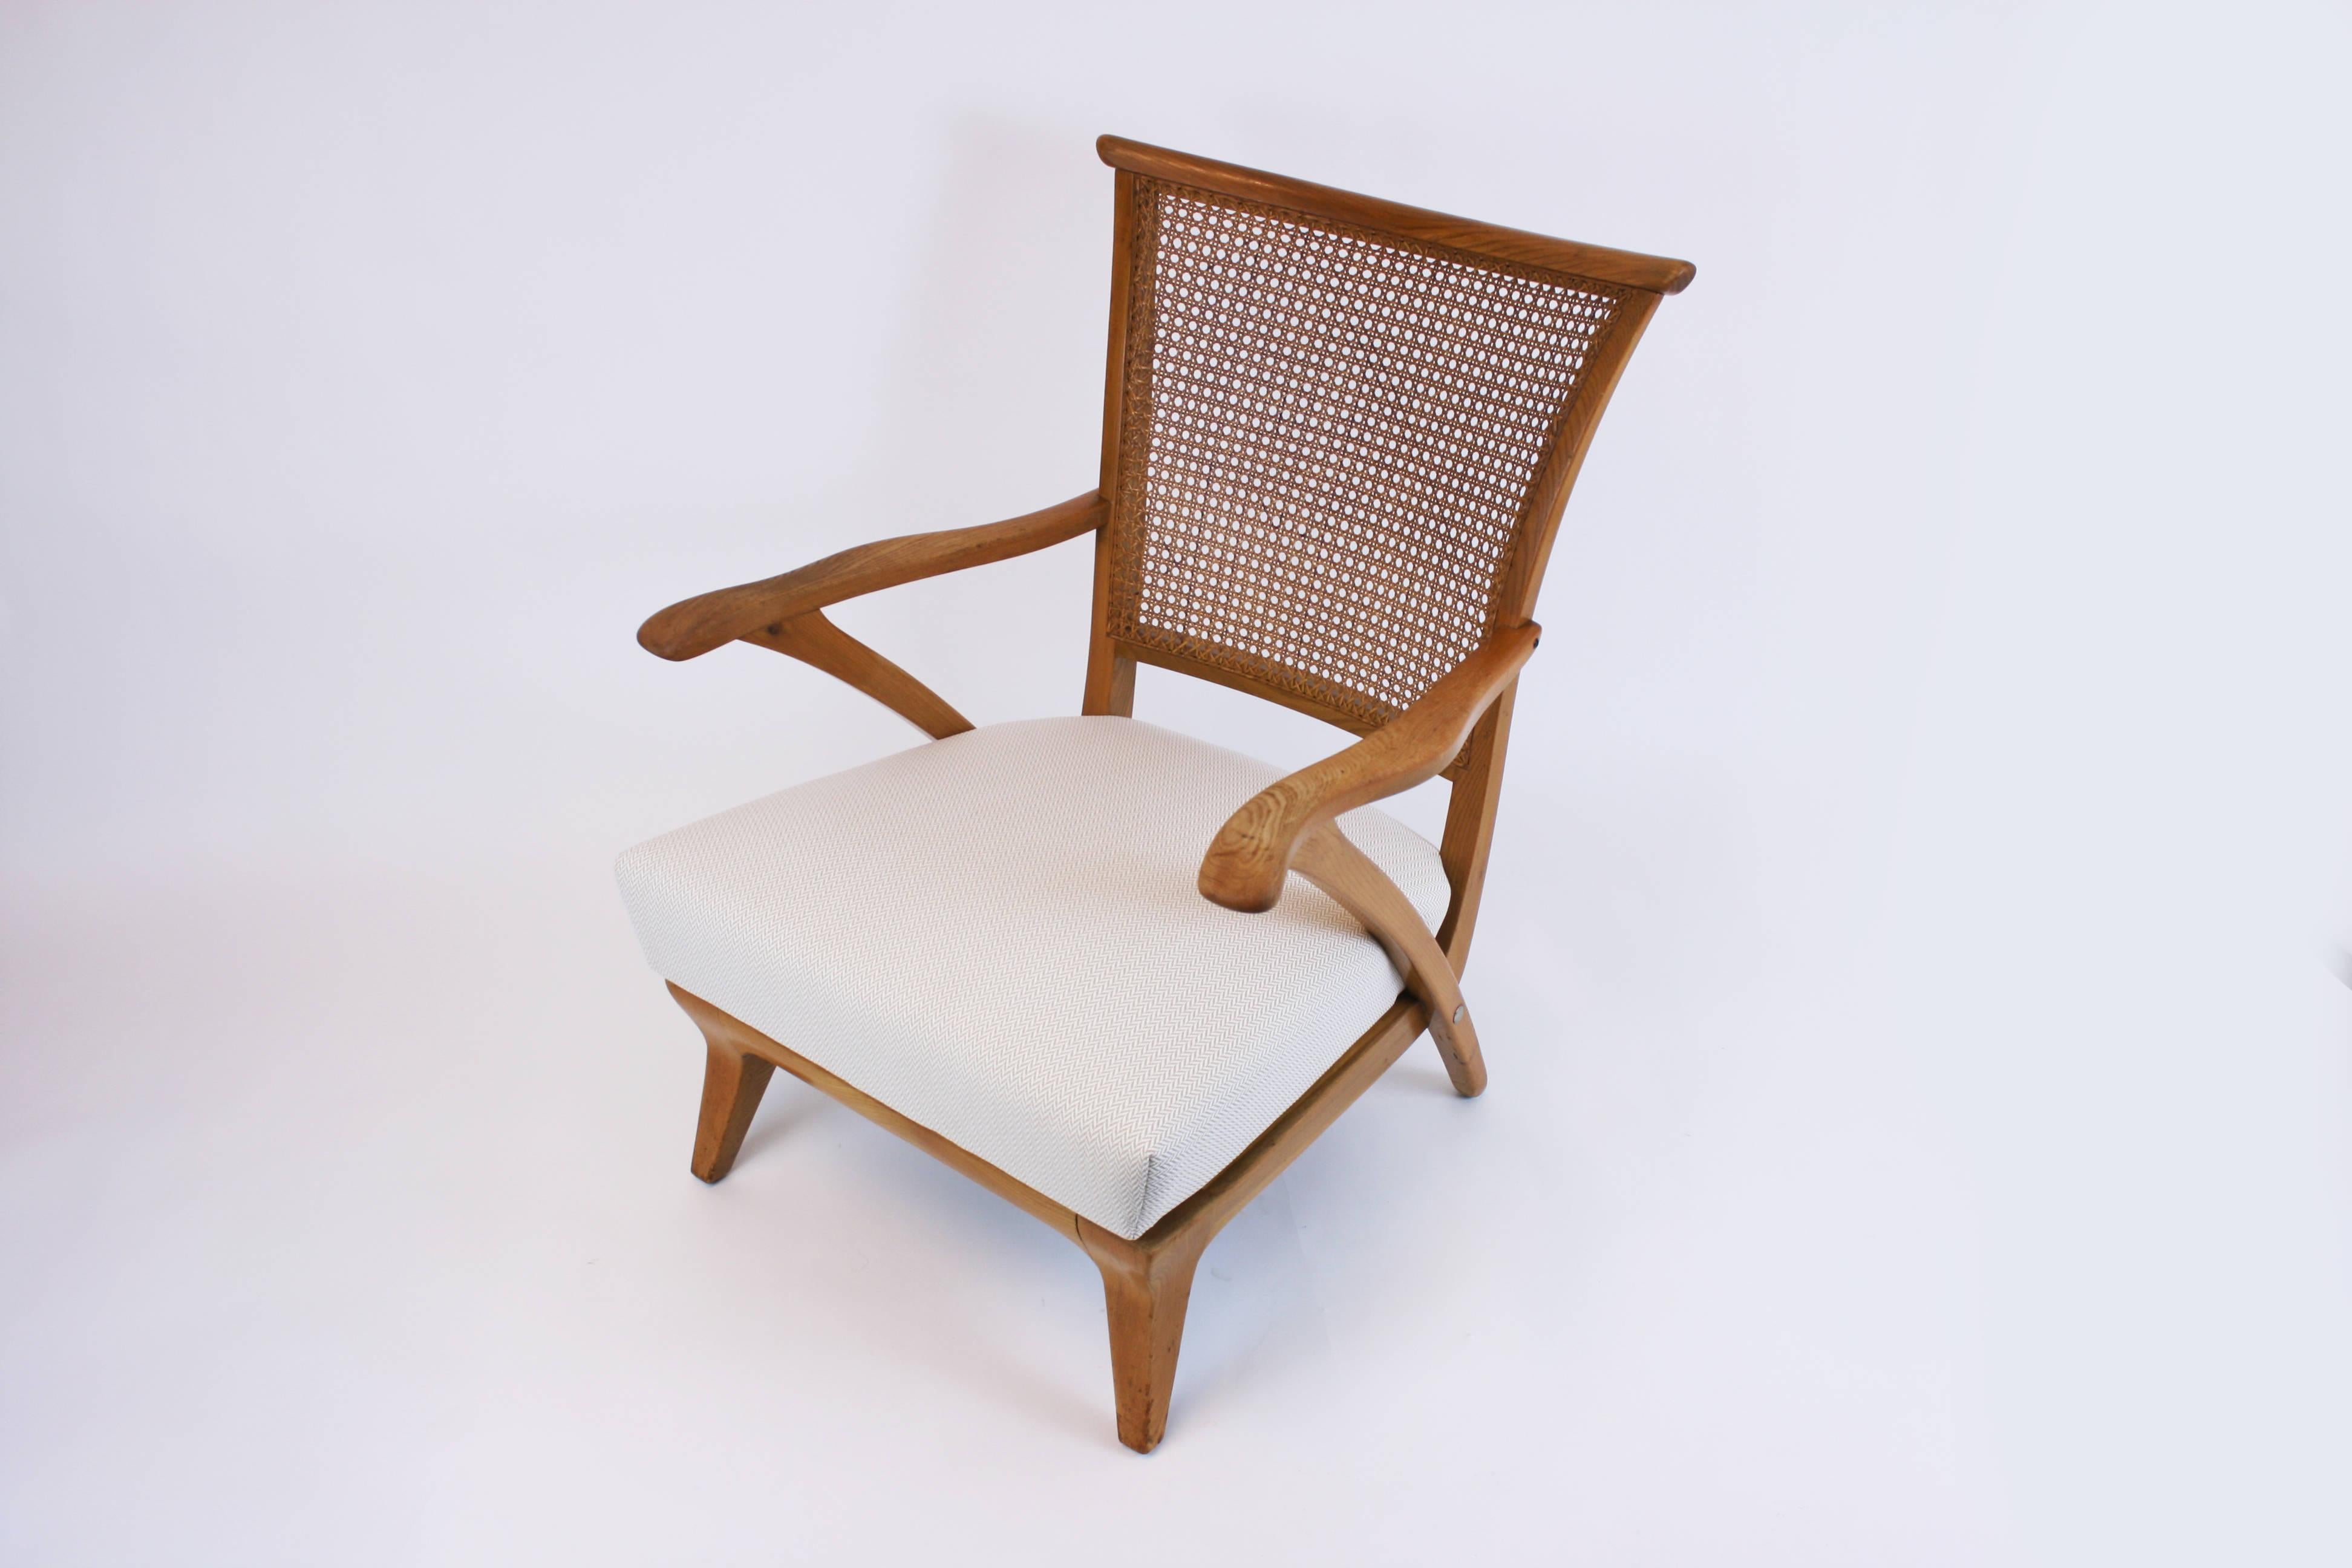 Loungesessel oder Sessel Holz Design Stil Kagan Korbweide Wien Österreich 1950er Jahre (Moderne der Mitte des Jahrhunderts) im Angebot